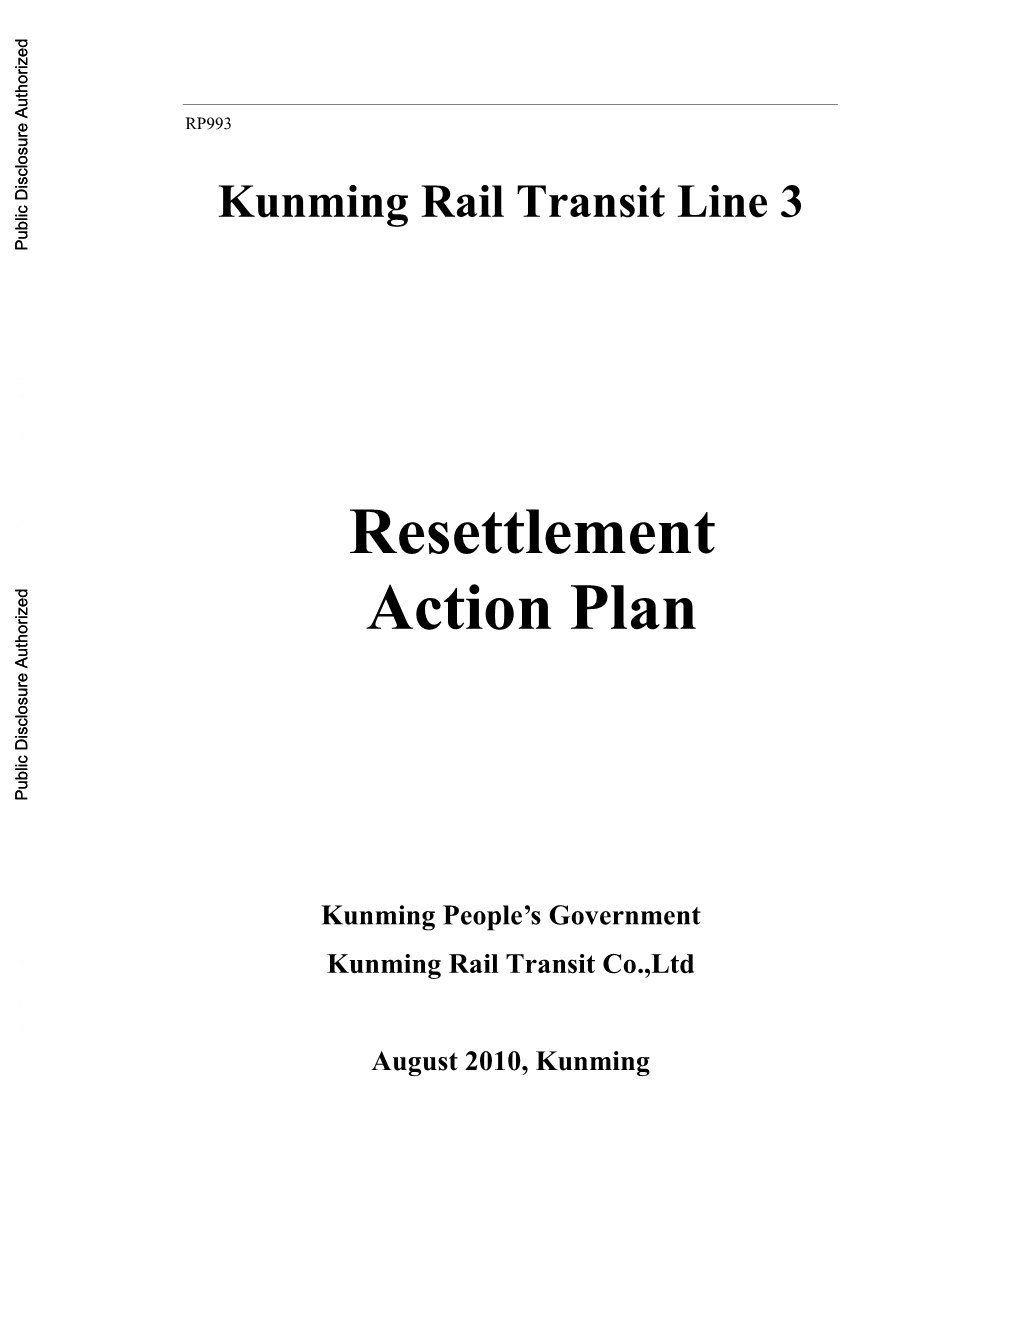 World Bank Loan Kunming Rail Transit Line 3 Project Resettlement Information Manual